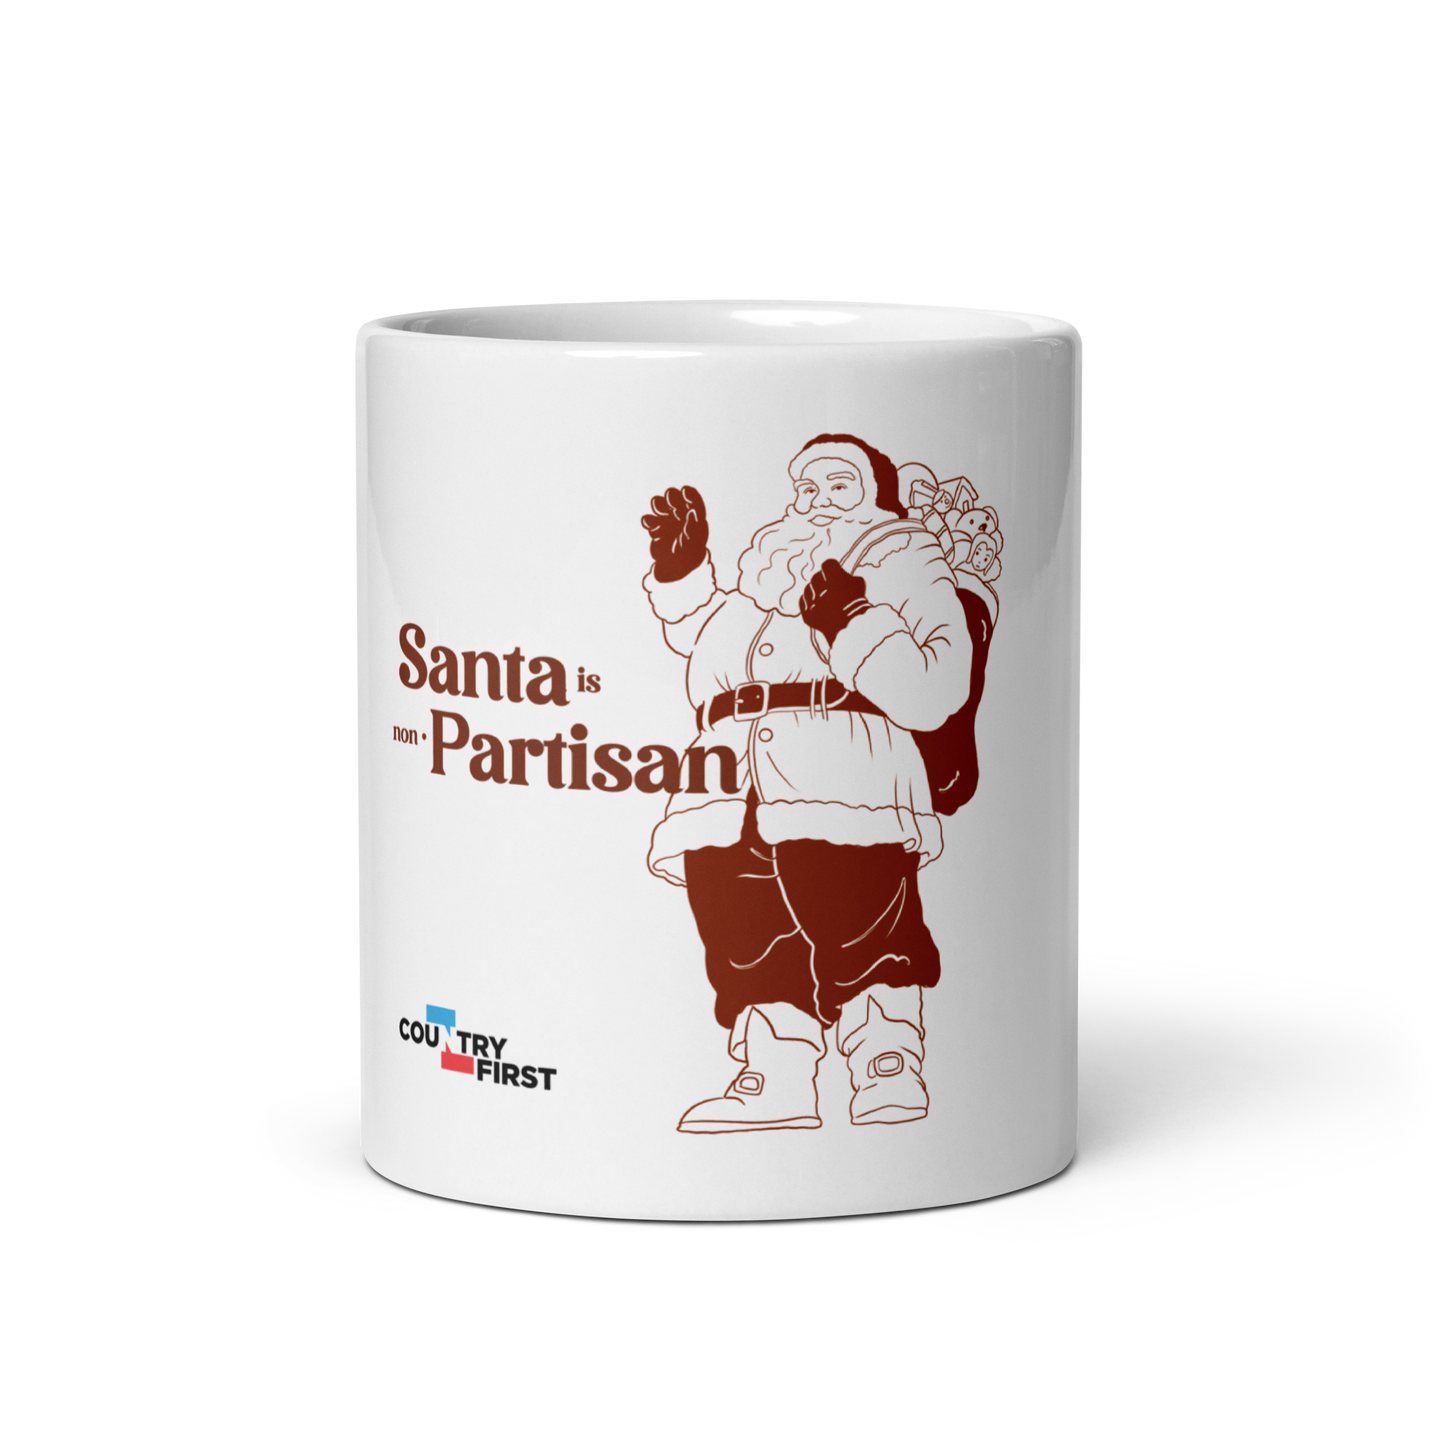 Santa is Non-Partisan Mug